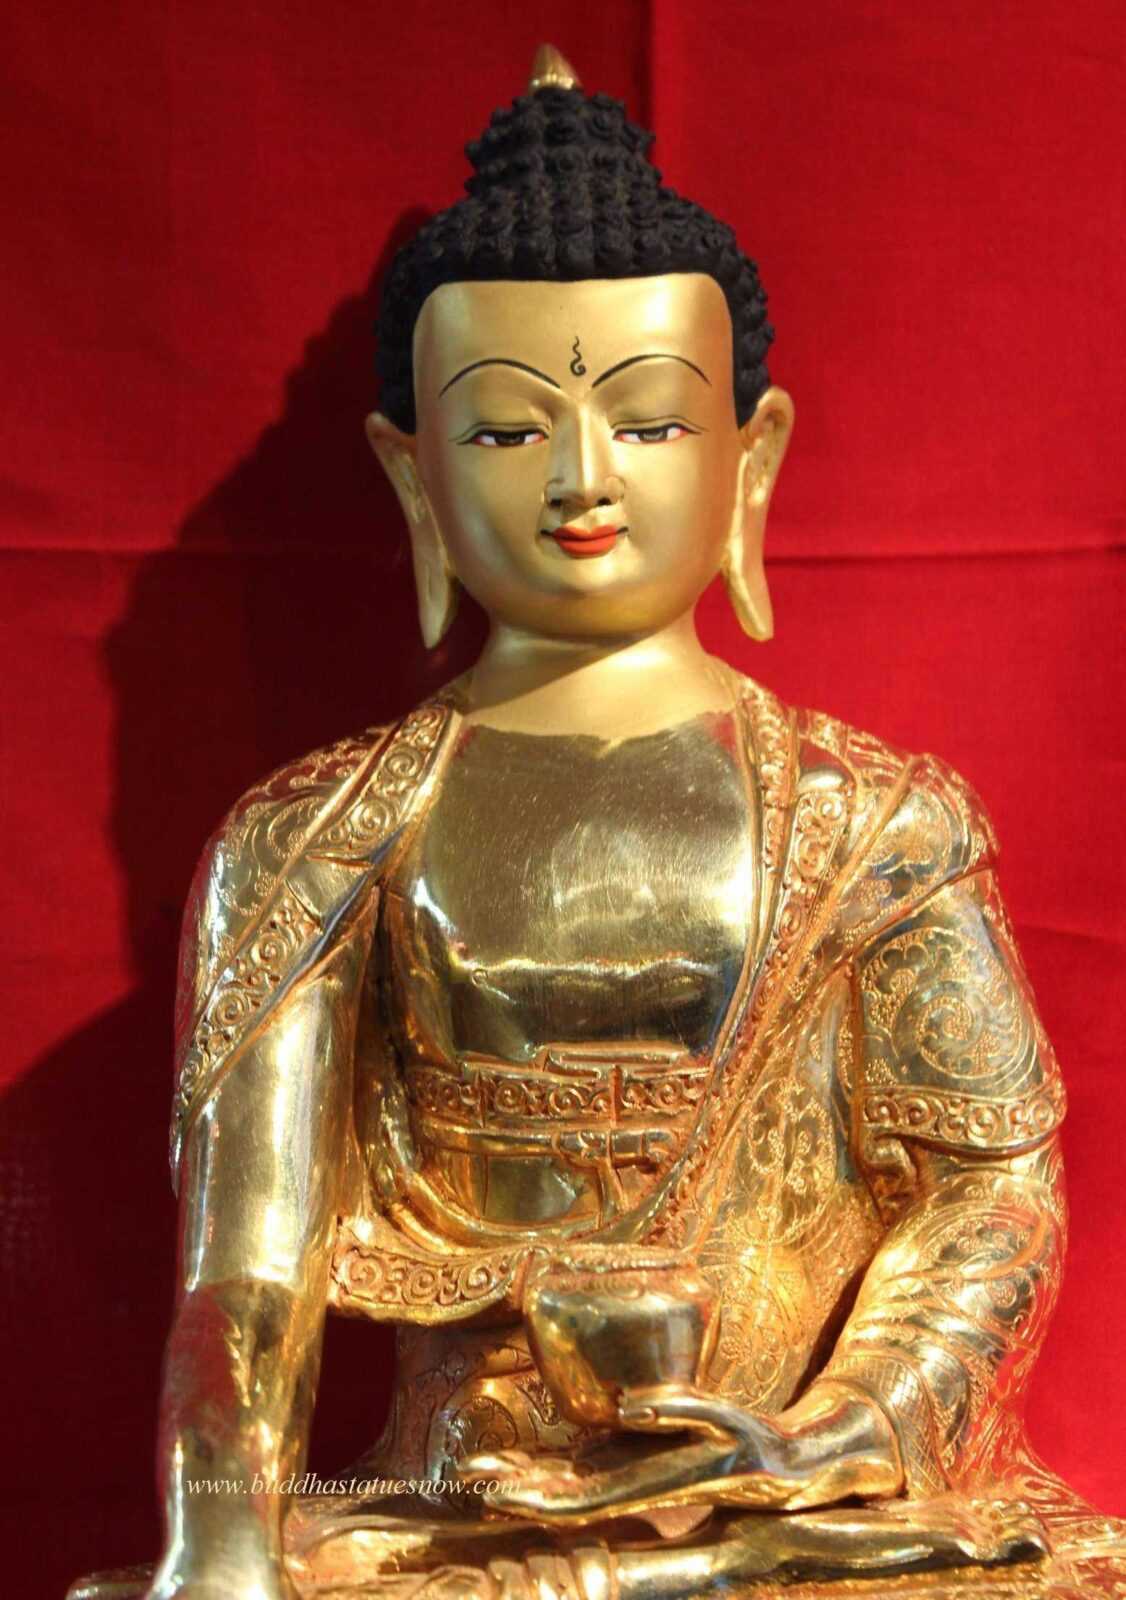 Fully Gold Gilded 8" Shakyamuni Buddha Statue (Limited Edition) - Face